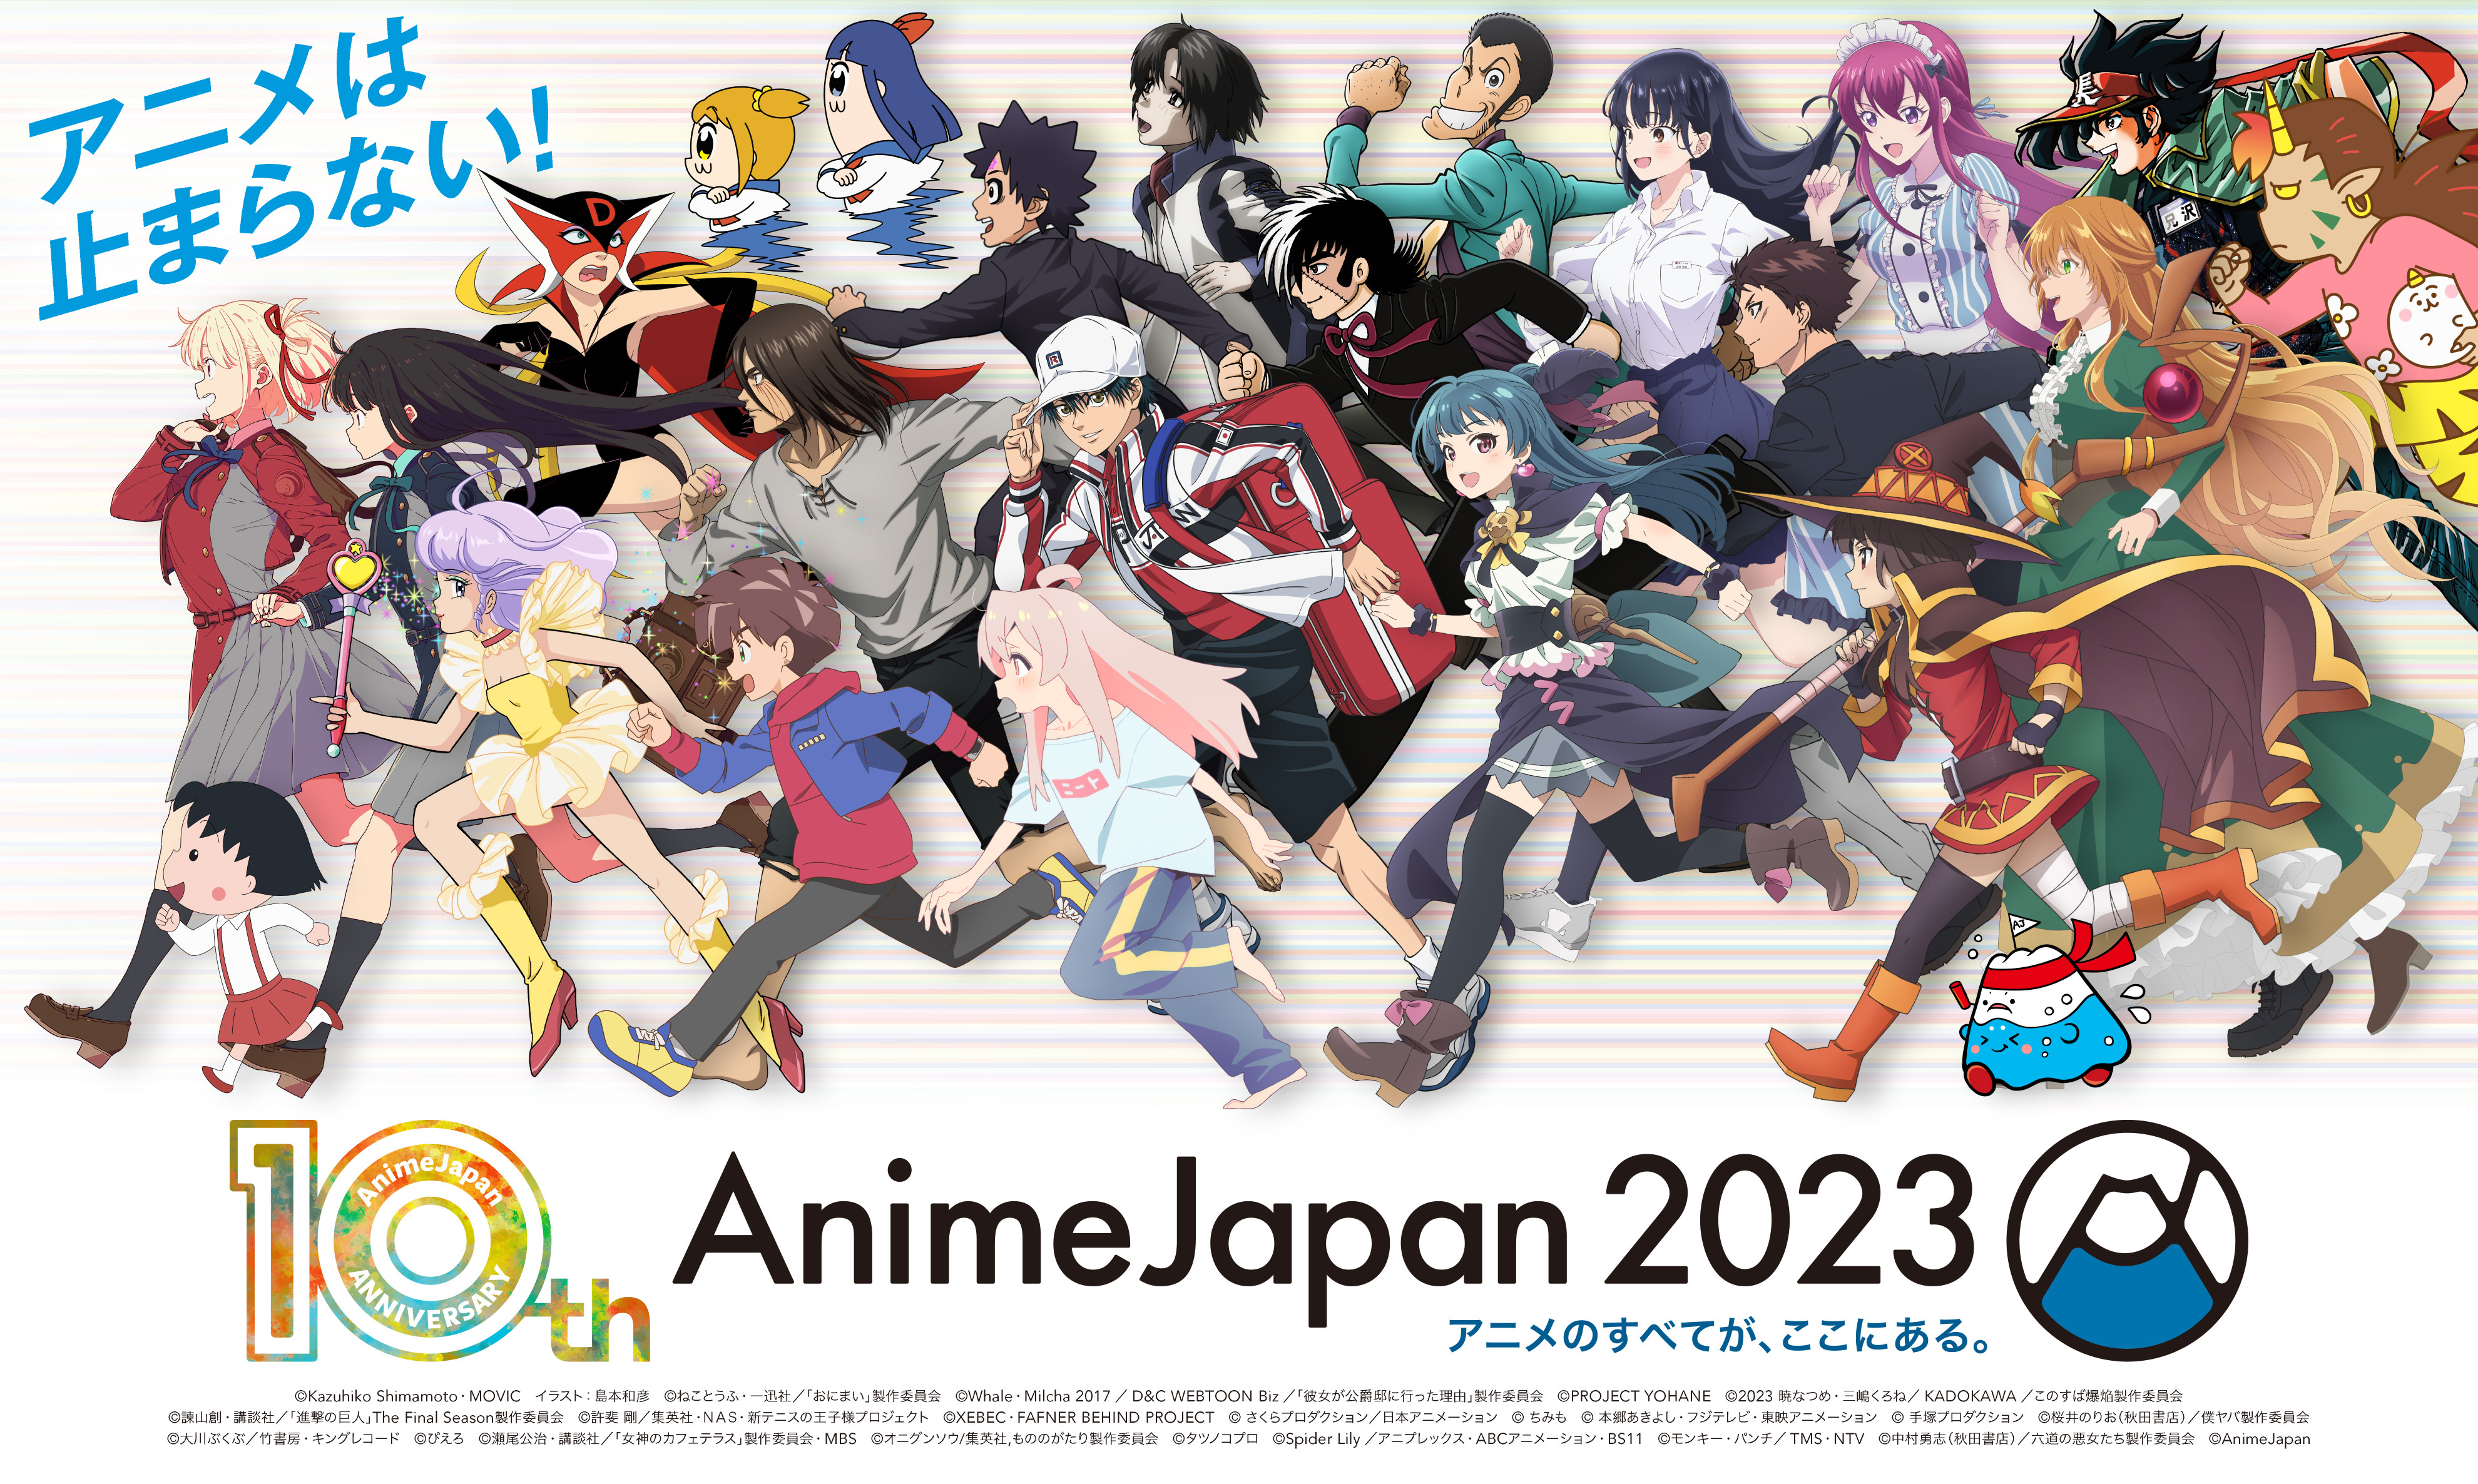 AnimeJapan 2023」全46ステージ情報一挙公開 - アキバ総研